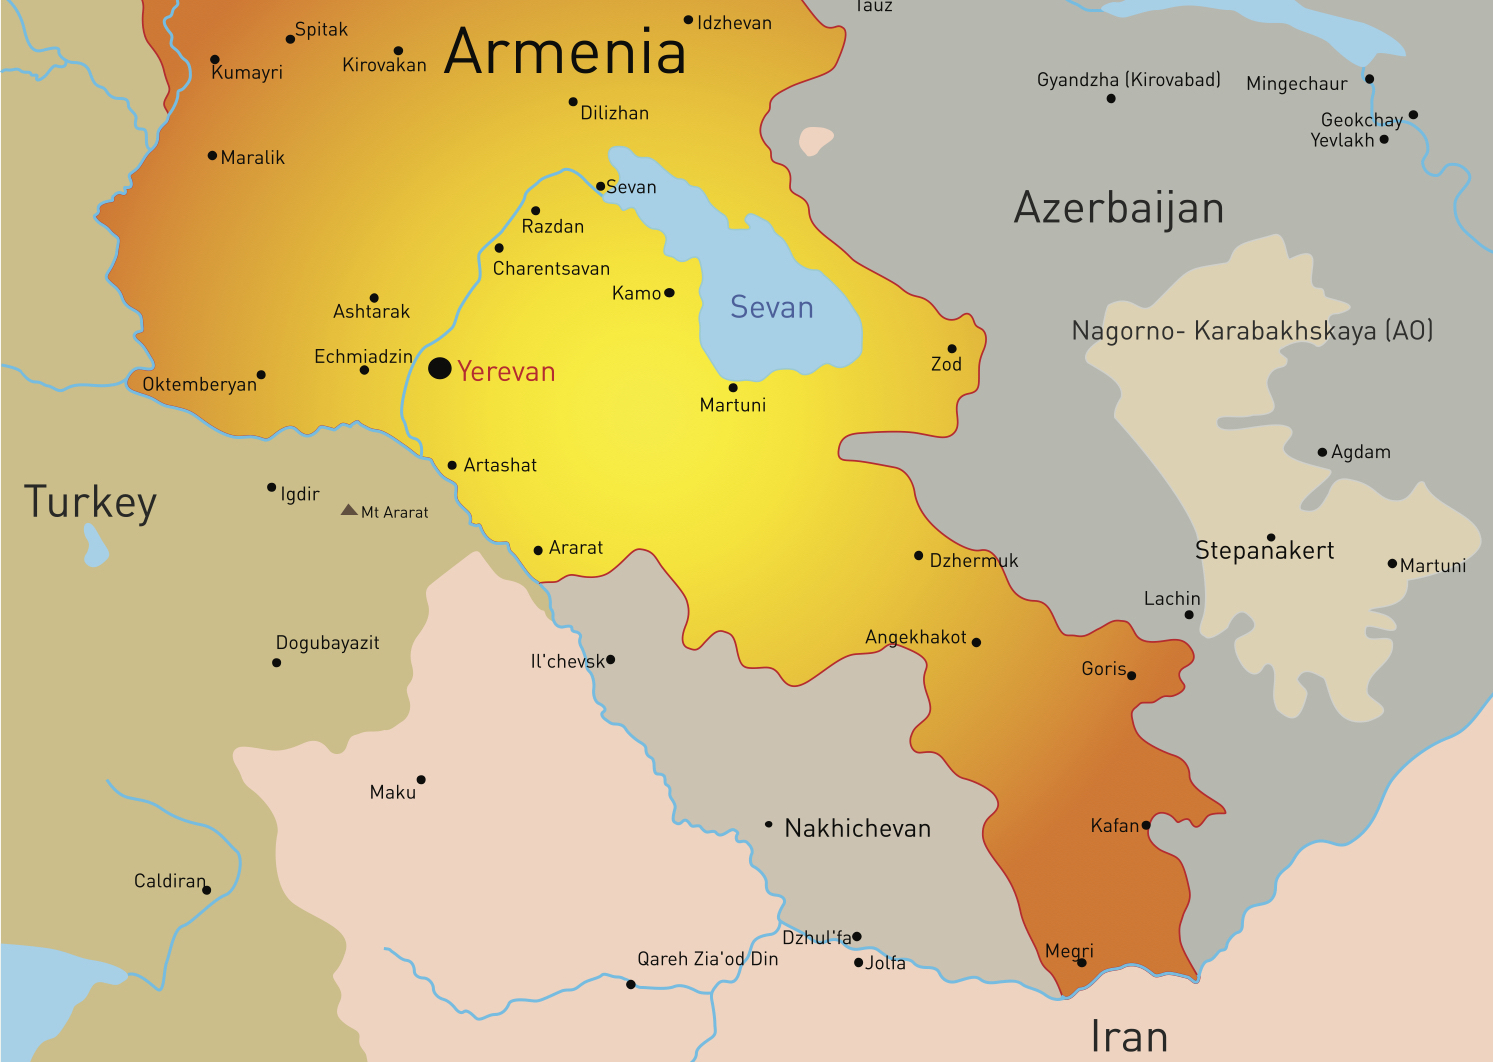 meghri-becomes-armenia-s-third-fez-emerging-europe